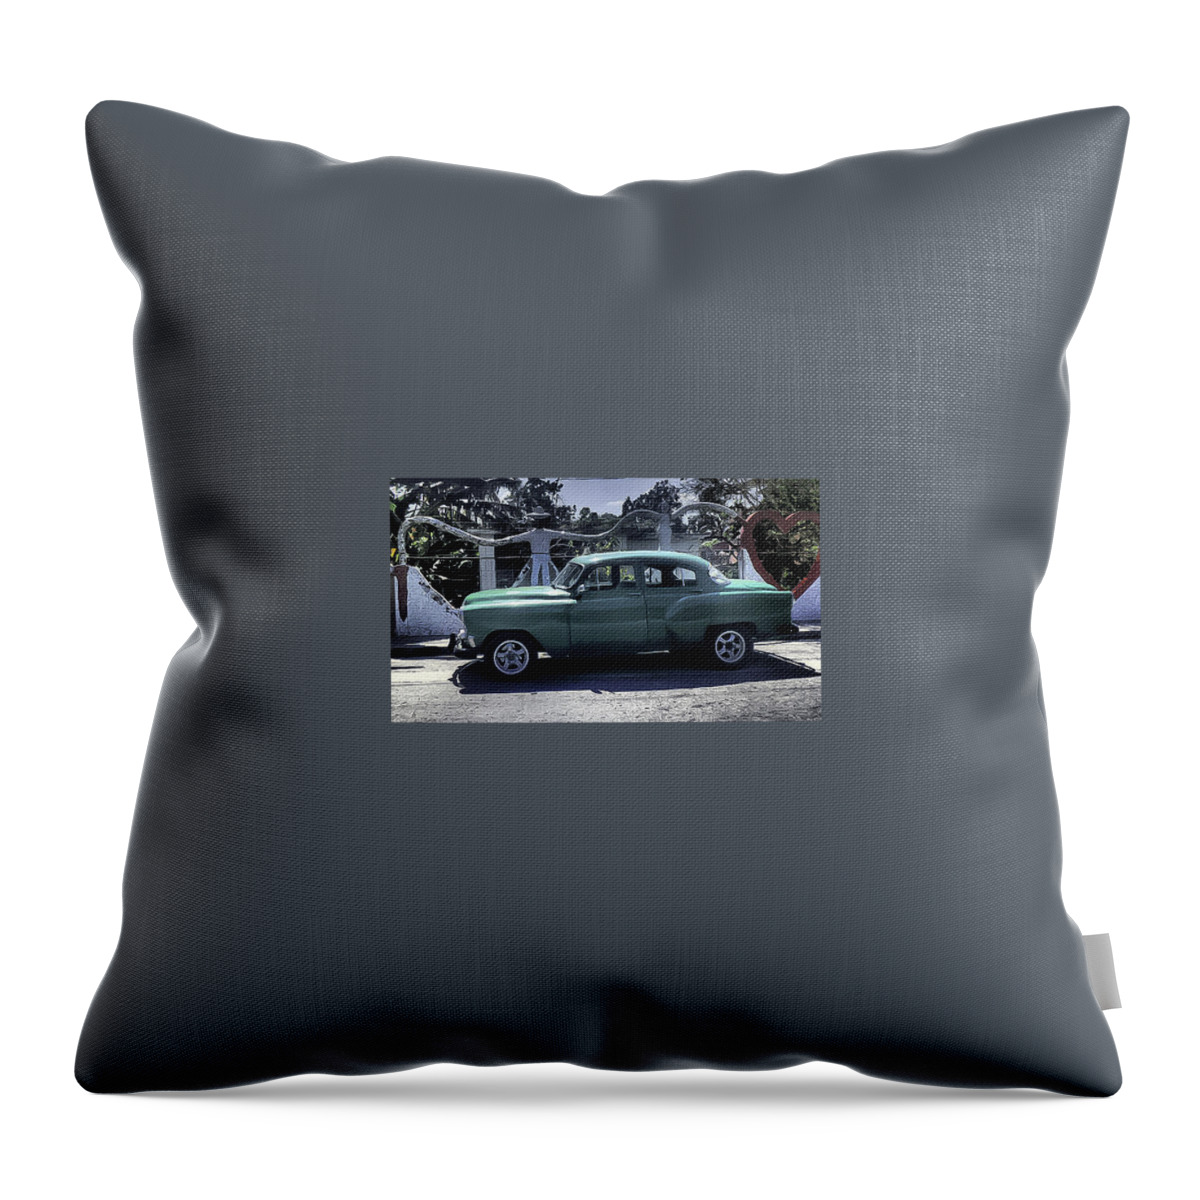 Cuba Throw Pillow featuring the photograph Cuba Car 8 by Will Burlingham